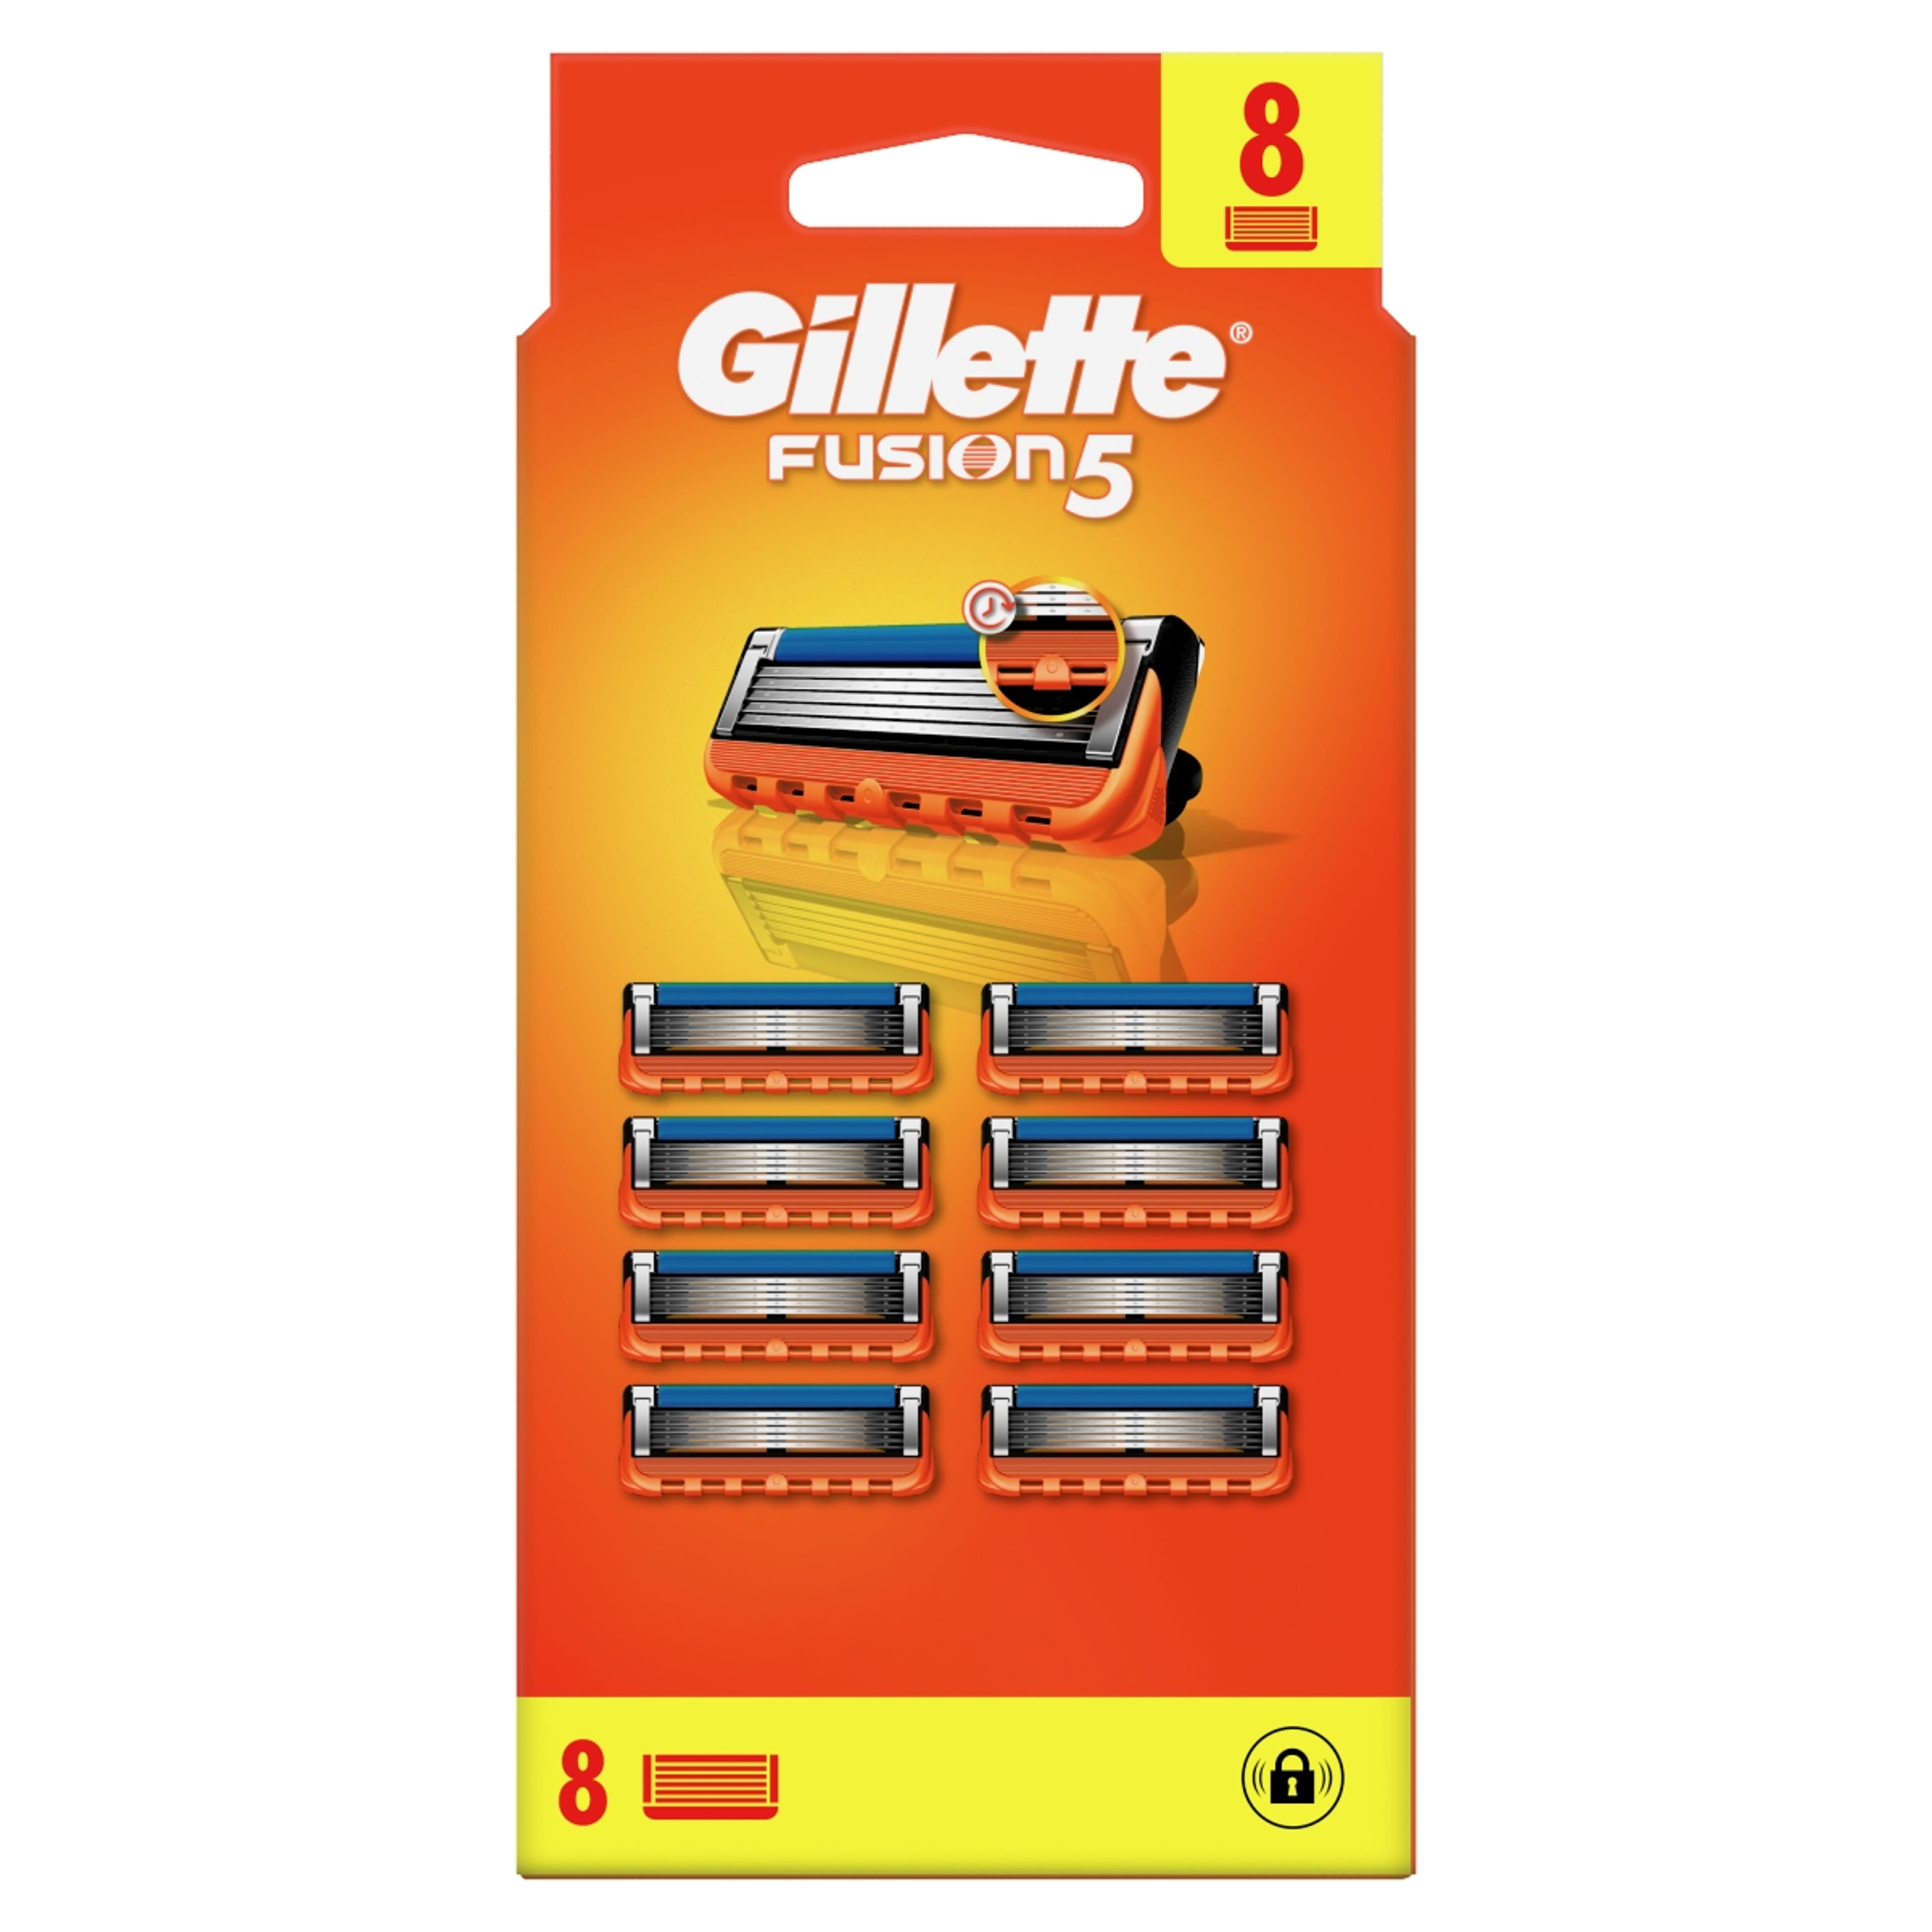 Gillette Fusion5 borotvabetétek férfi borotvához - 8 db